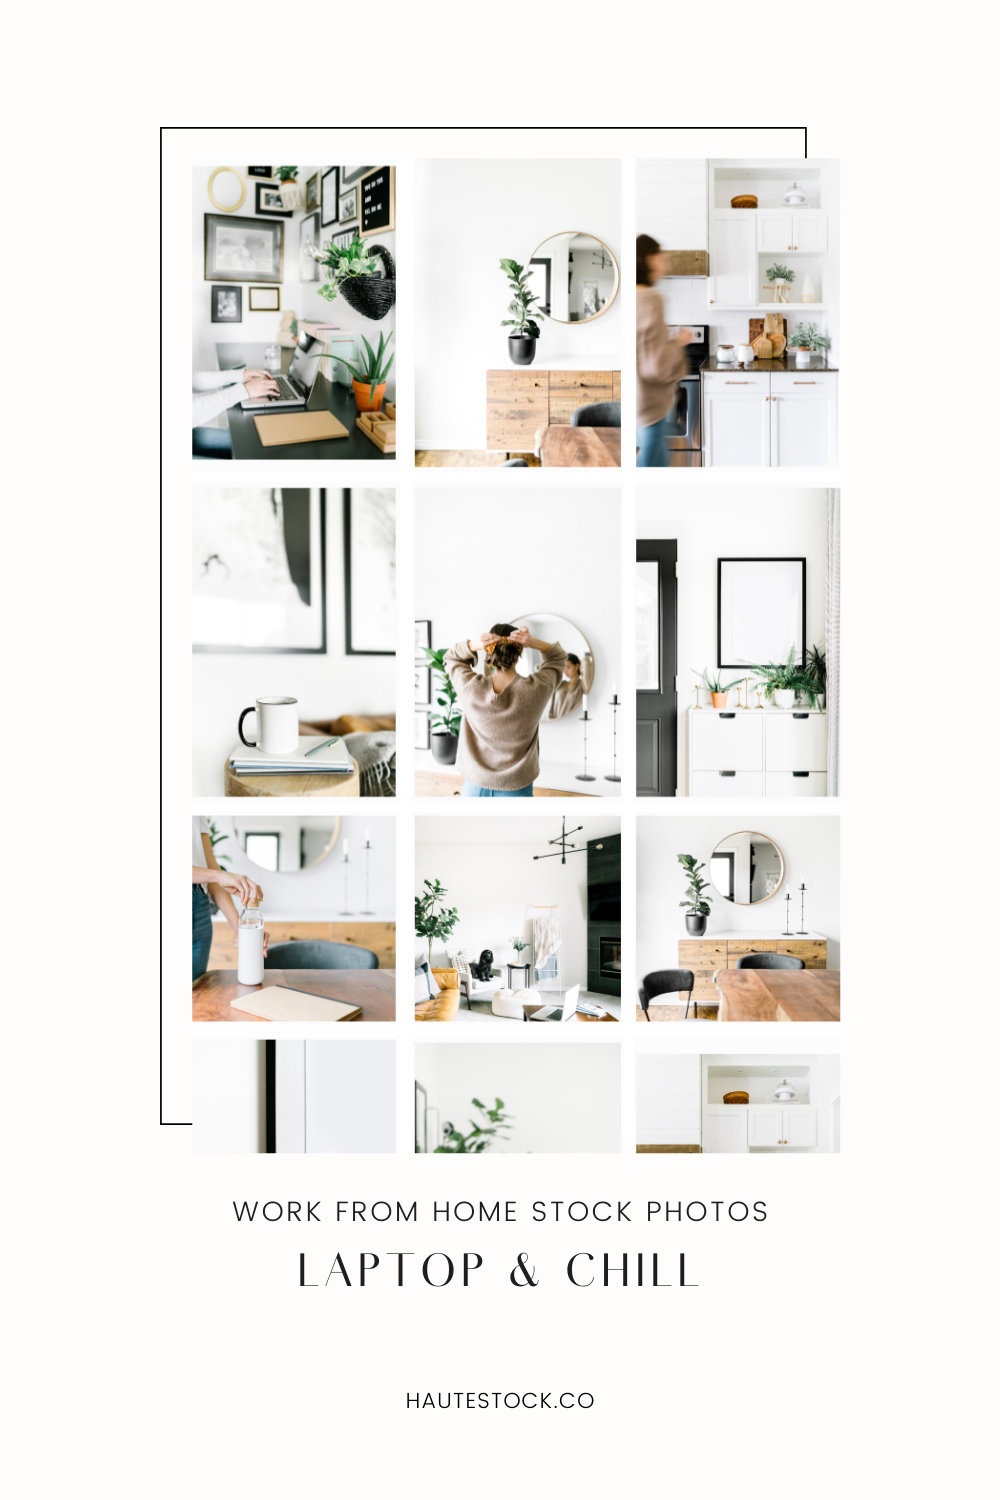 Modern home office work-from-home stock photos for women entrepreneurs